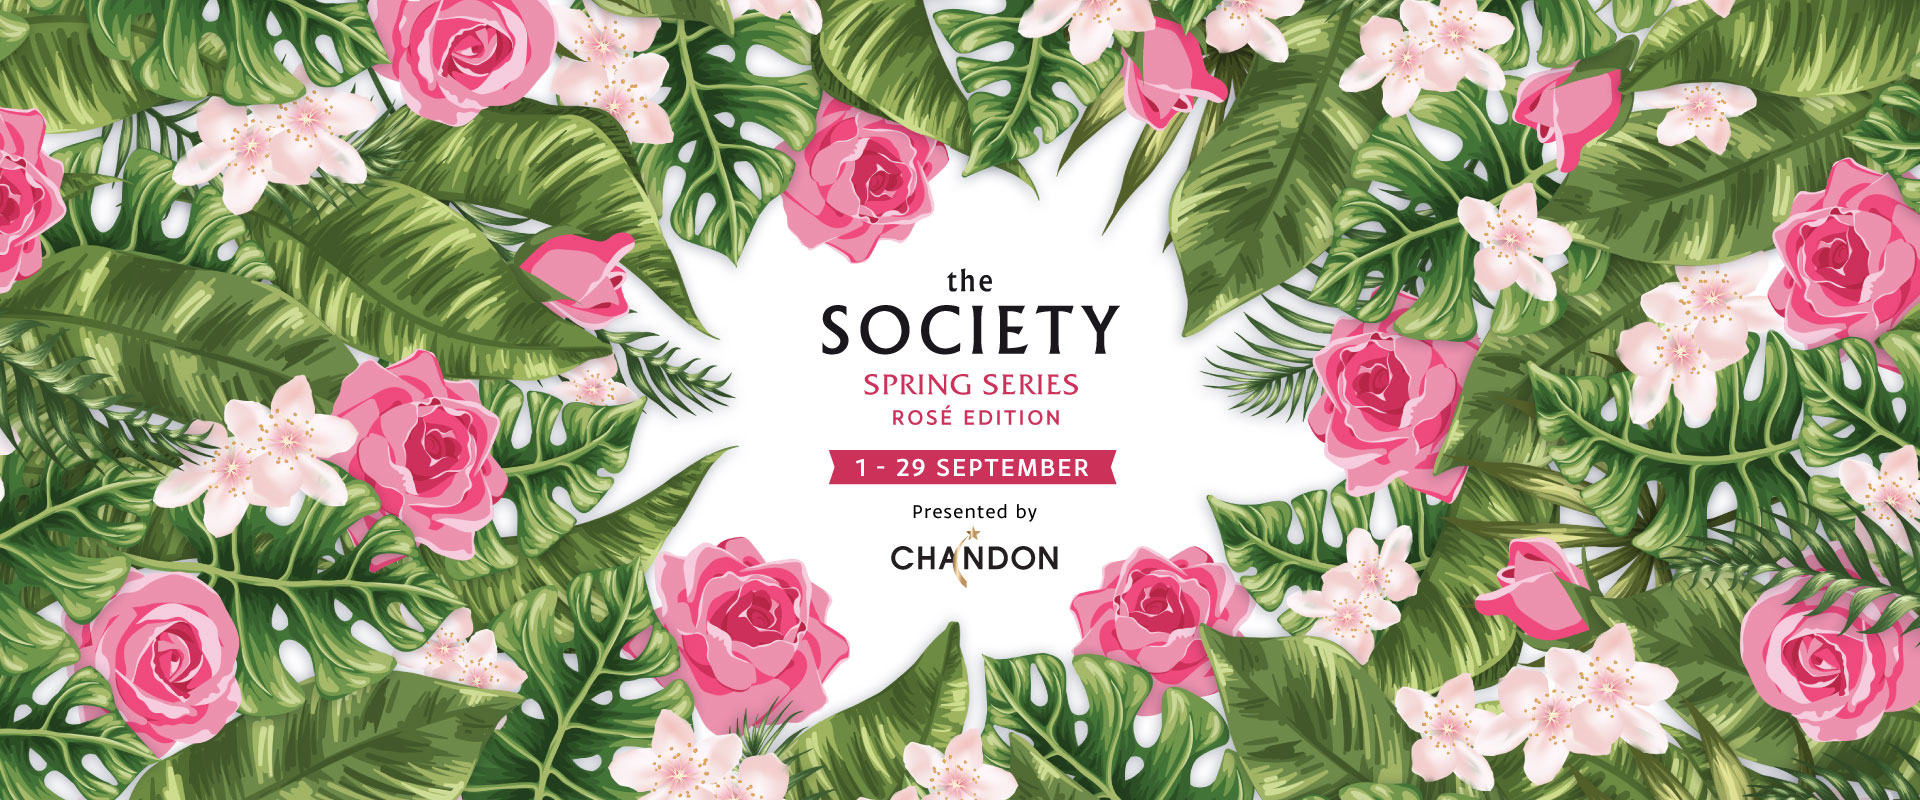 
Society Spring Series Banner